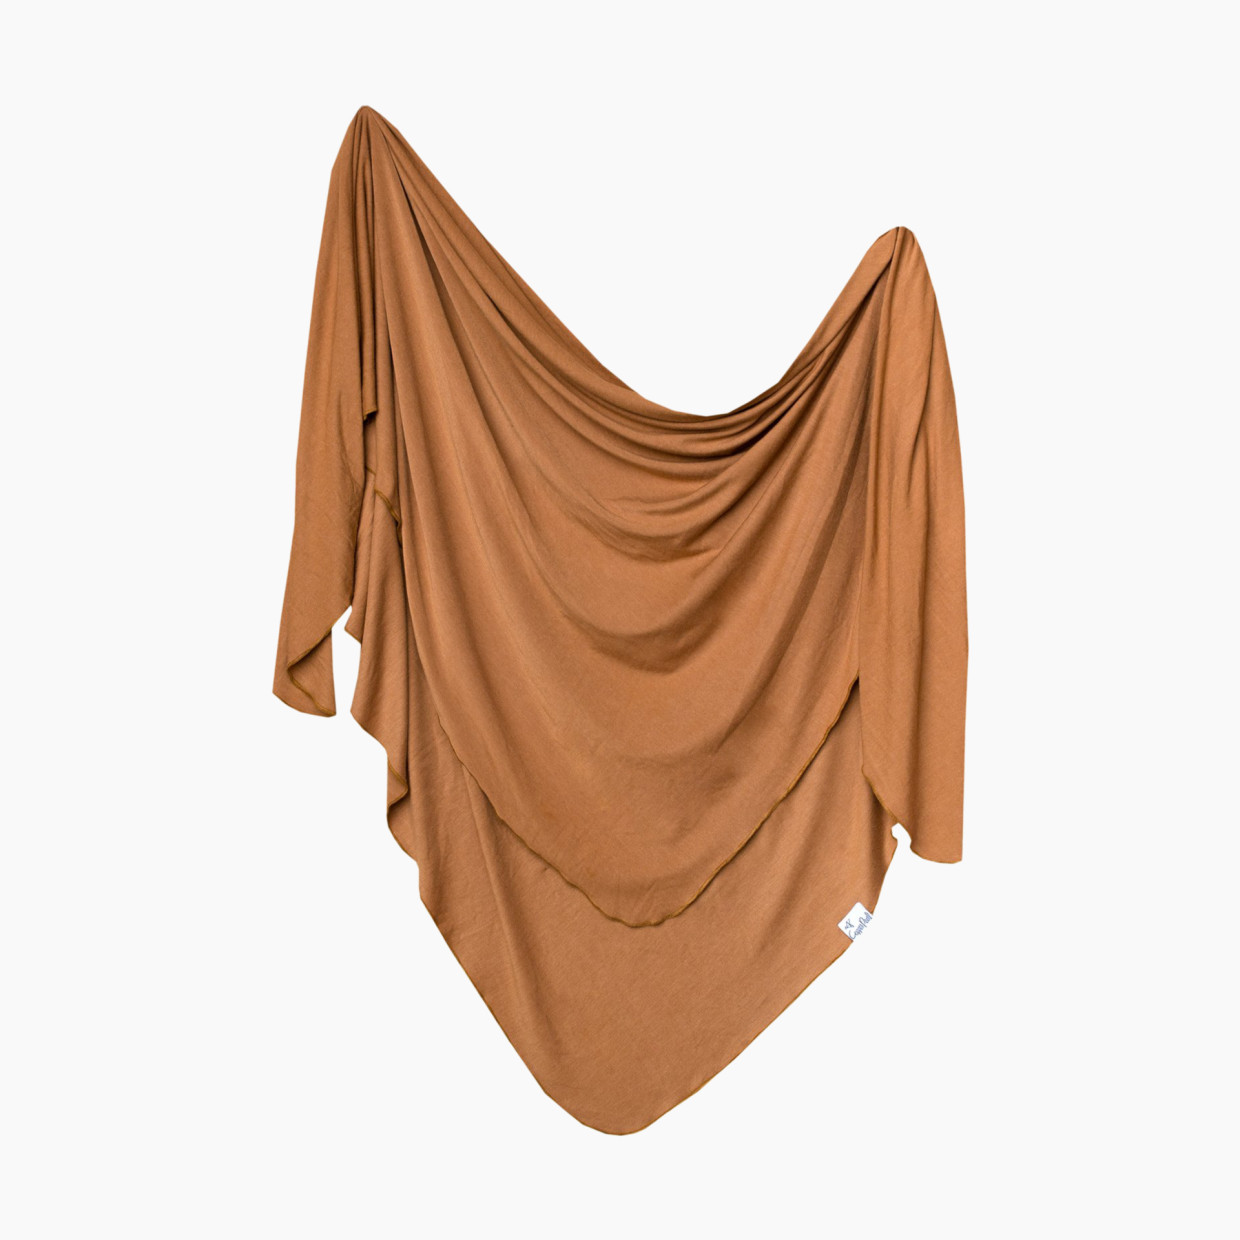 Copper Pearl Swaddle Blanket - Camel.